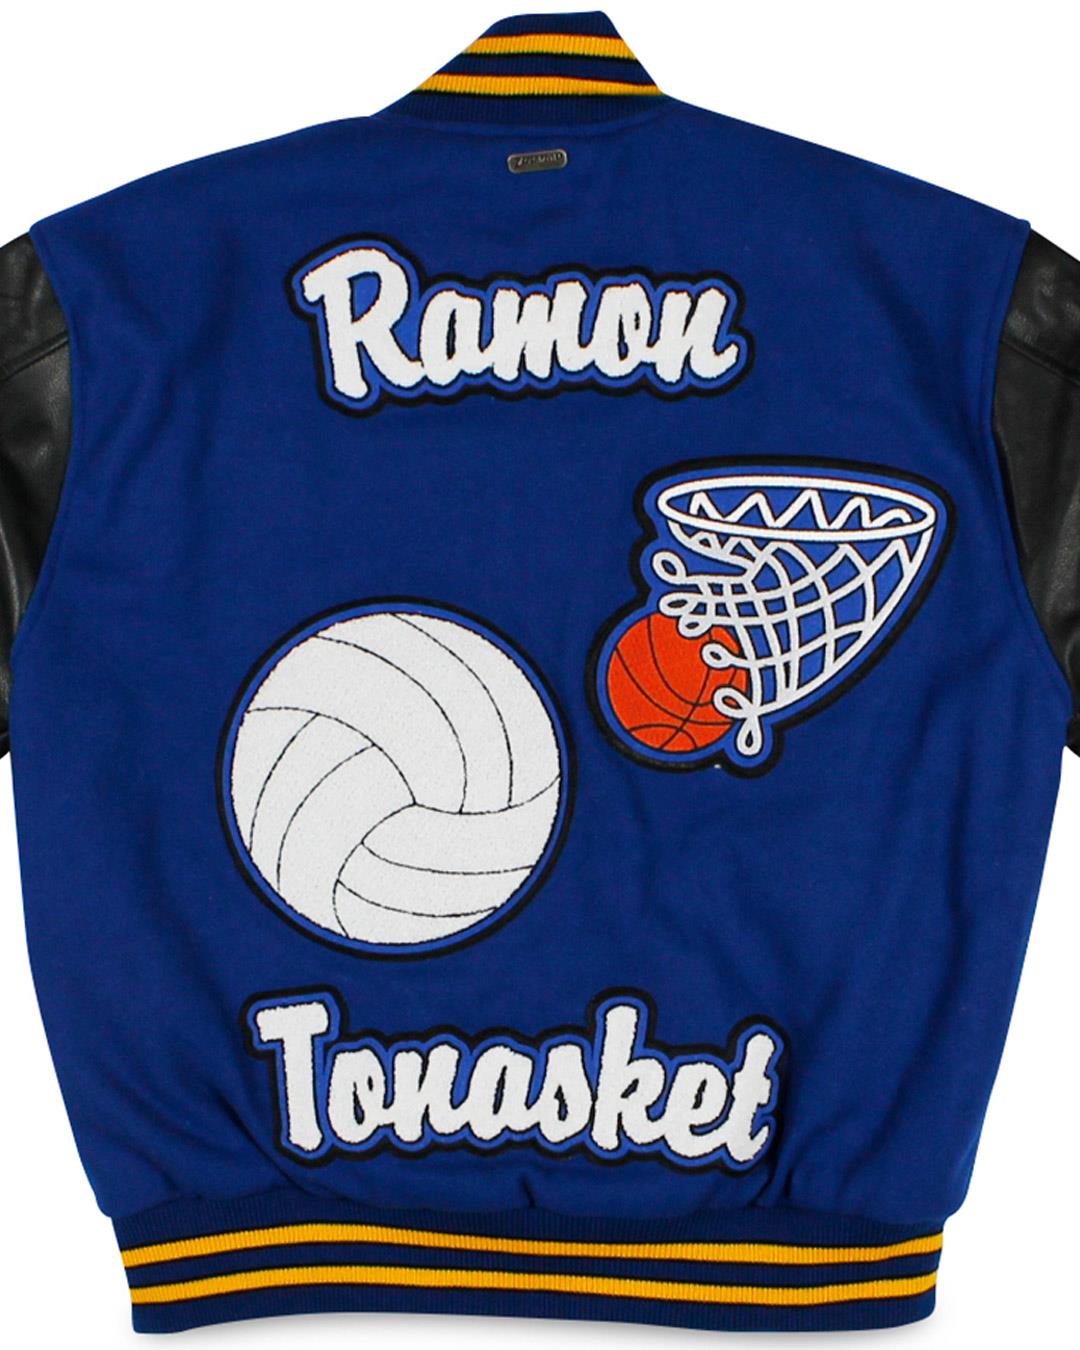 Tonasket High School Letterman Jacket, Tonasket WA - Back